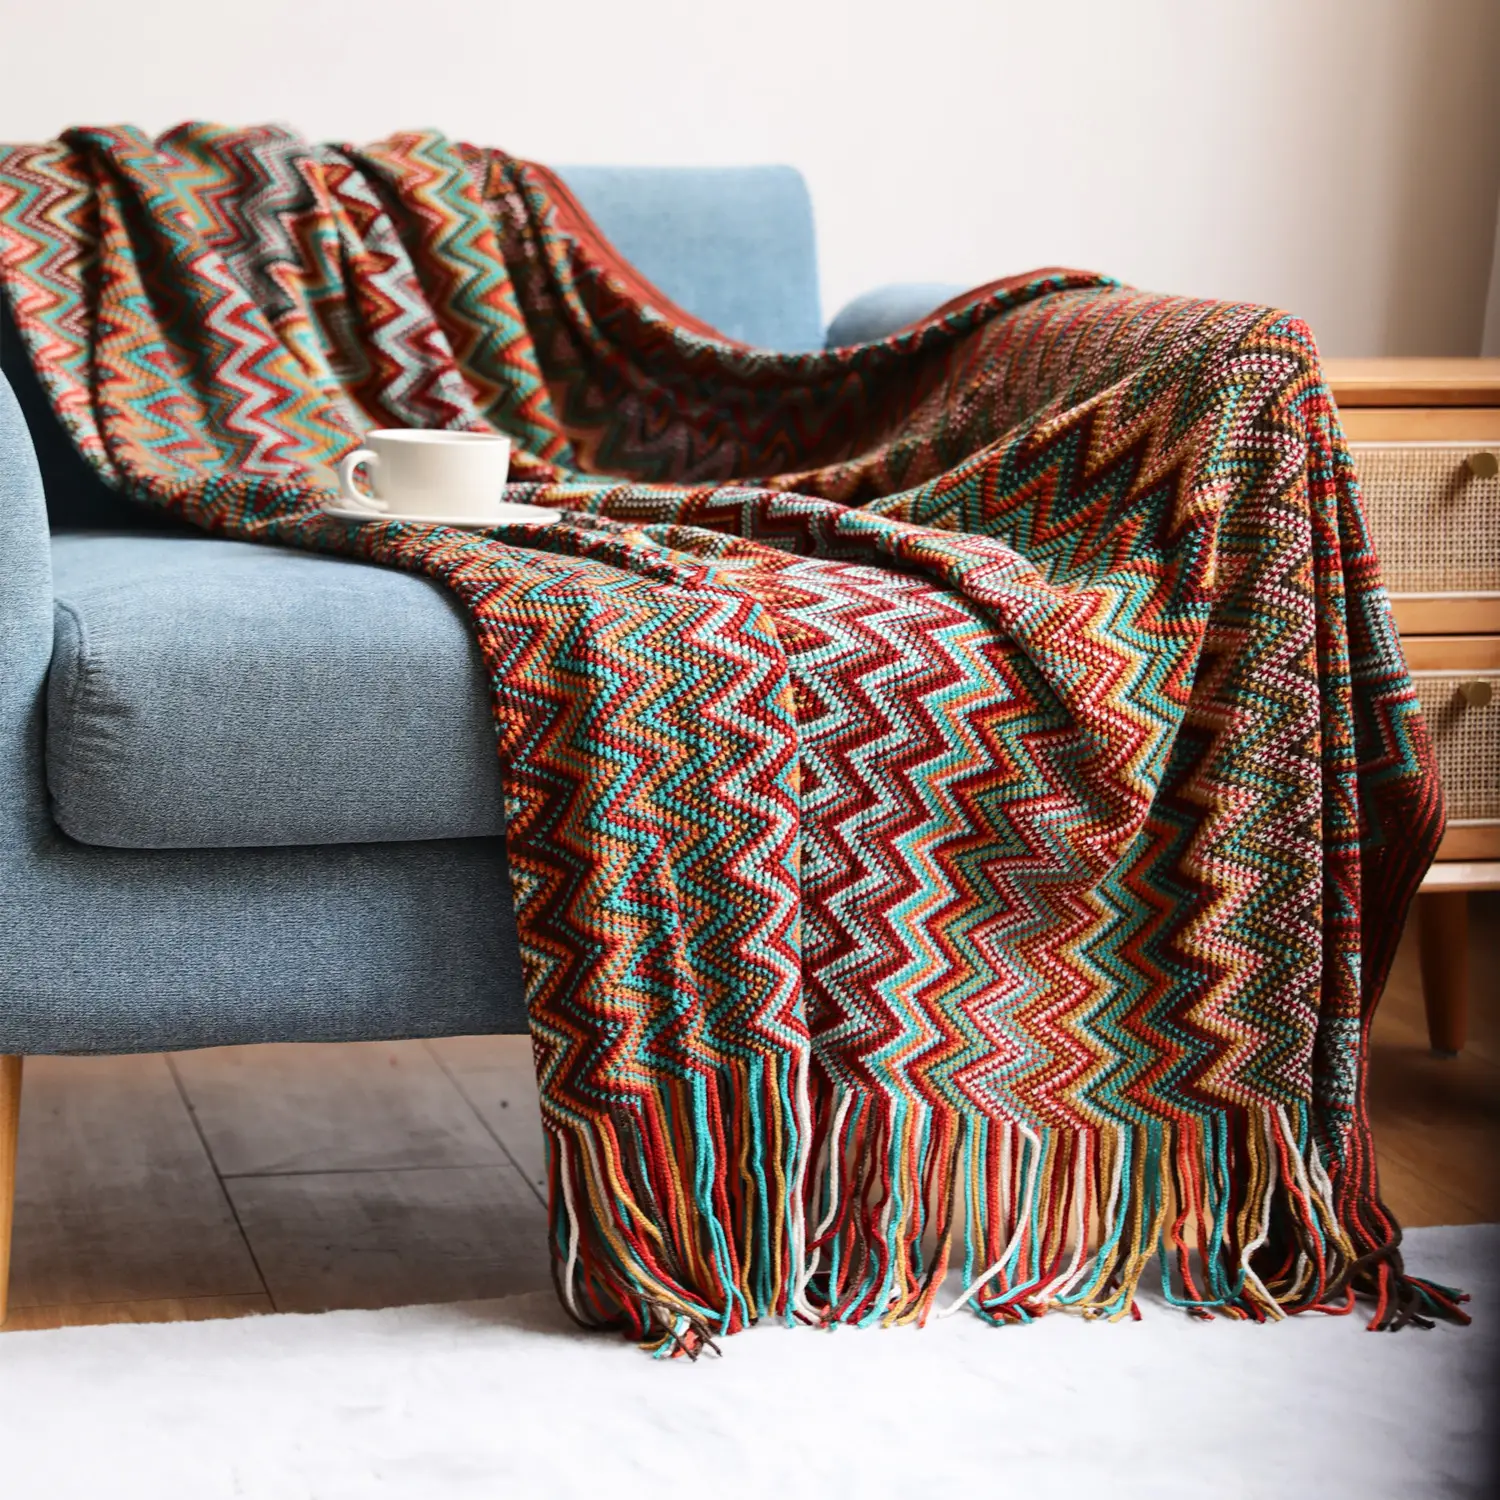 Cobertor de malha geométrica, novo estilo, boho, colorida, franja geométrica, cama de dormir, cobertor personalizado caspa, outros cobertores